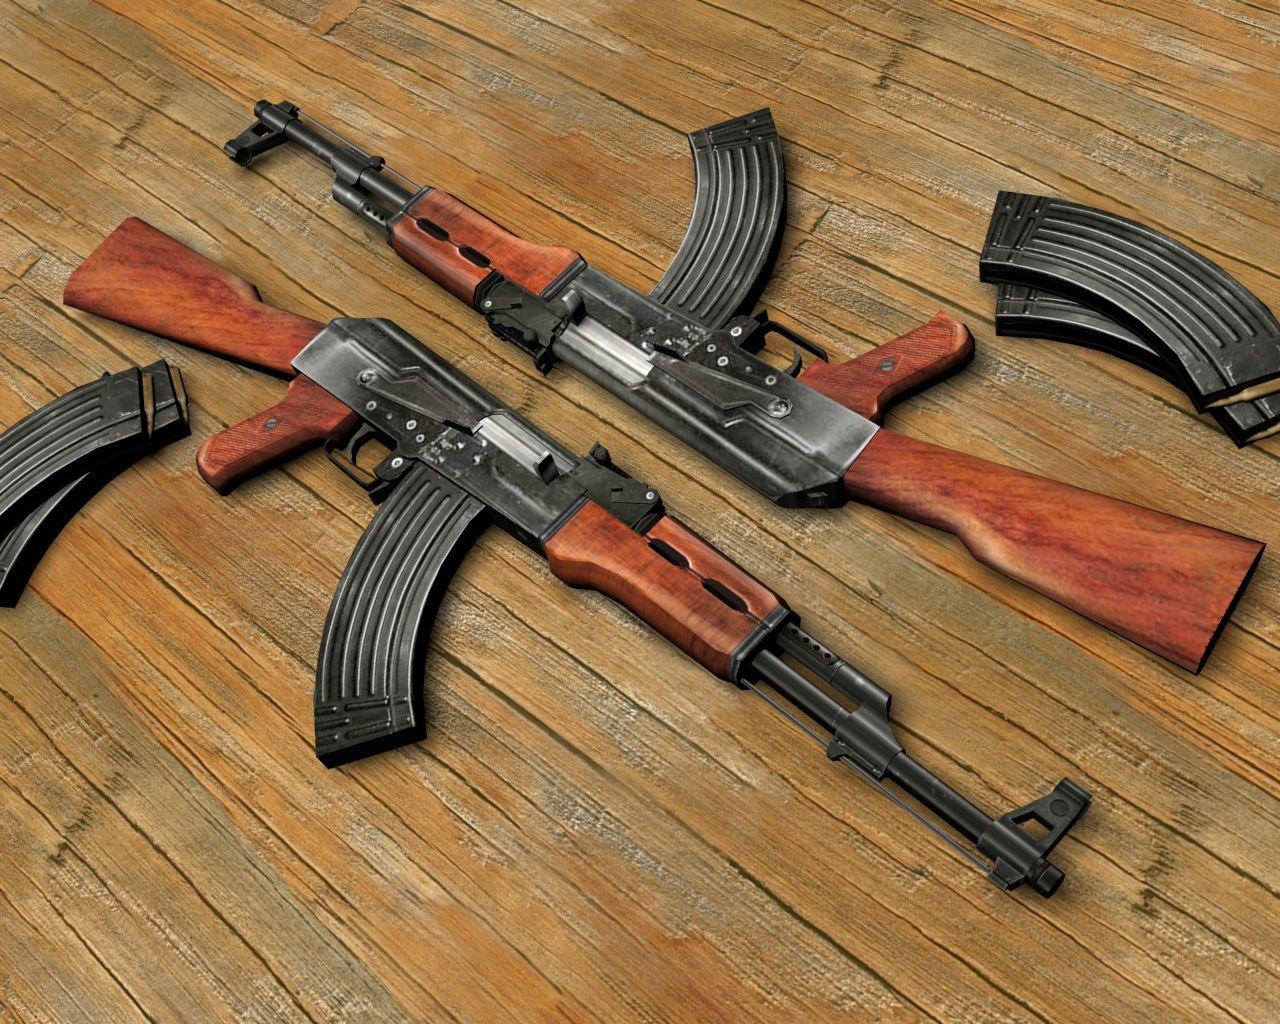 guns image AK47 HD wallpaper and background photo